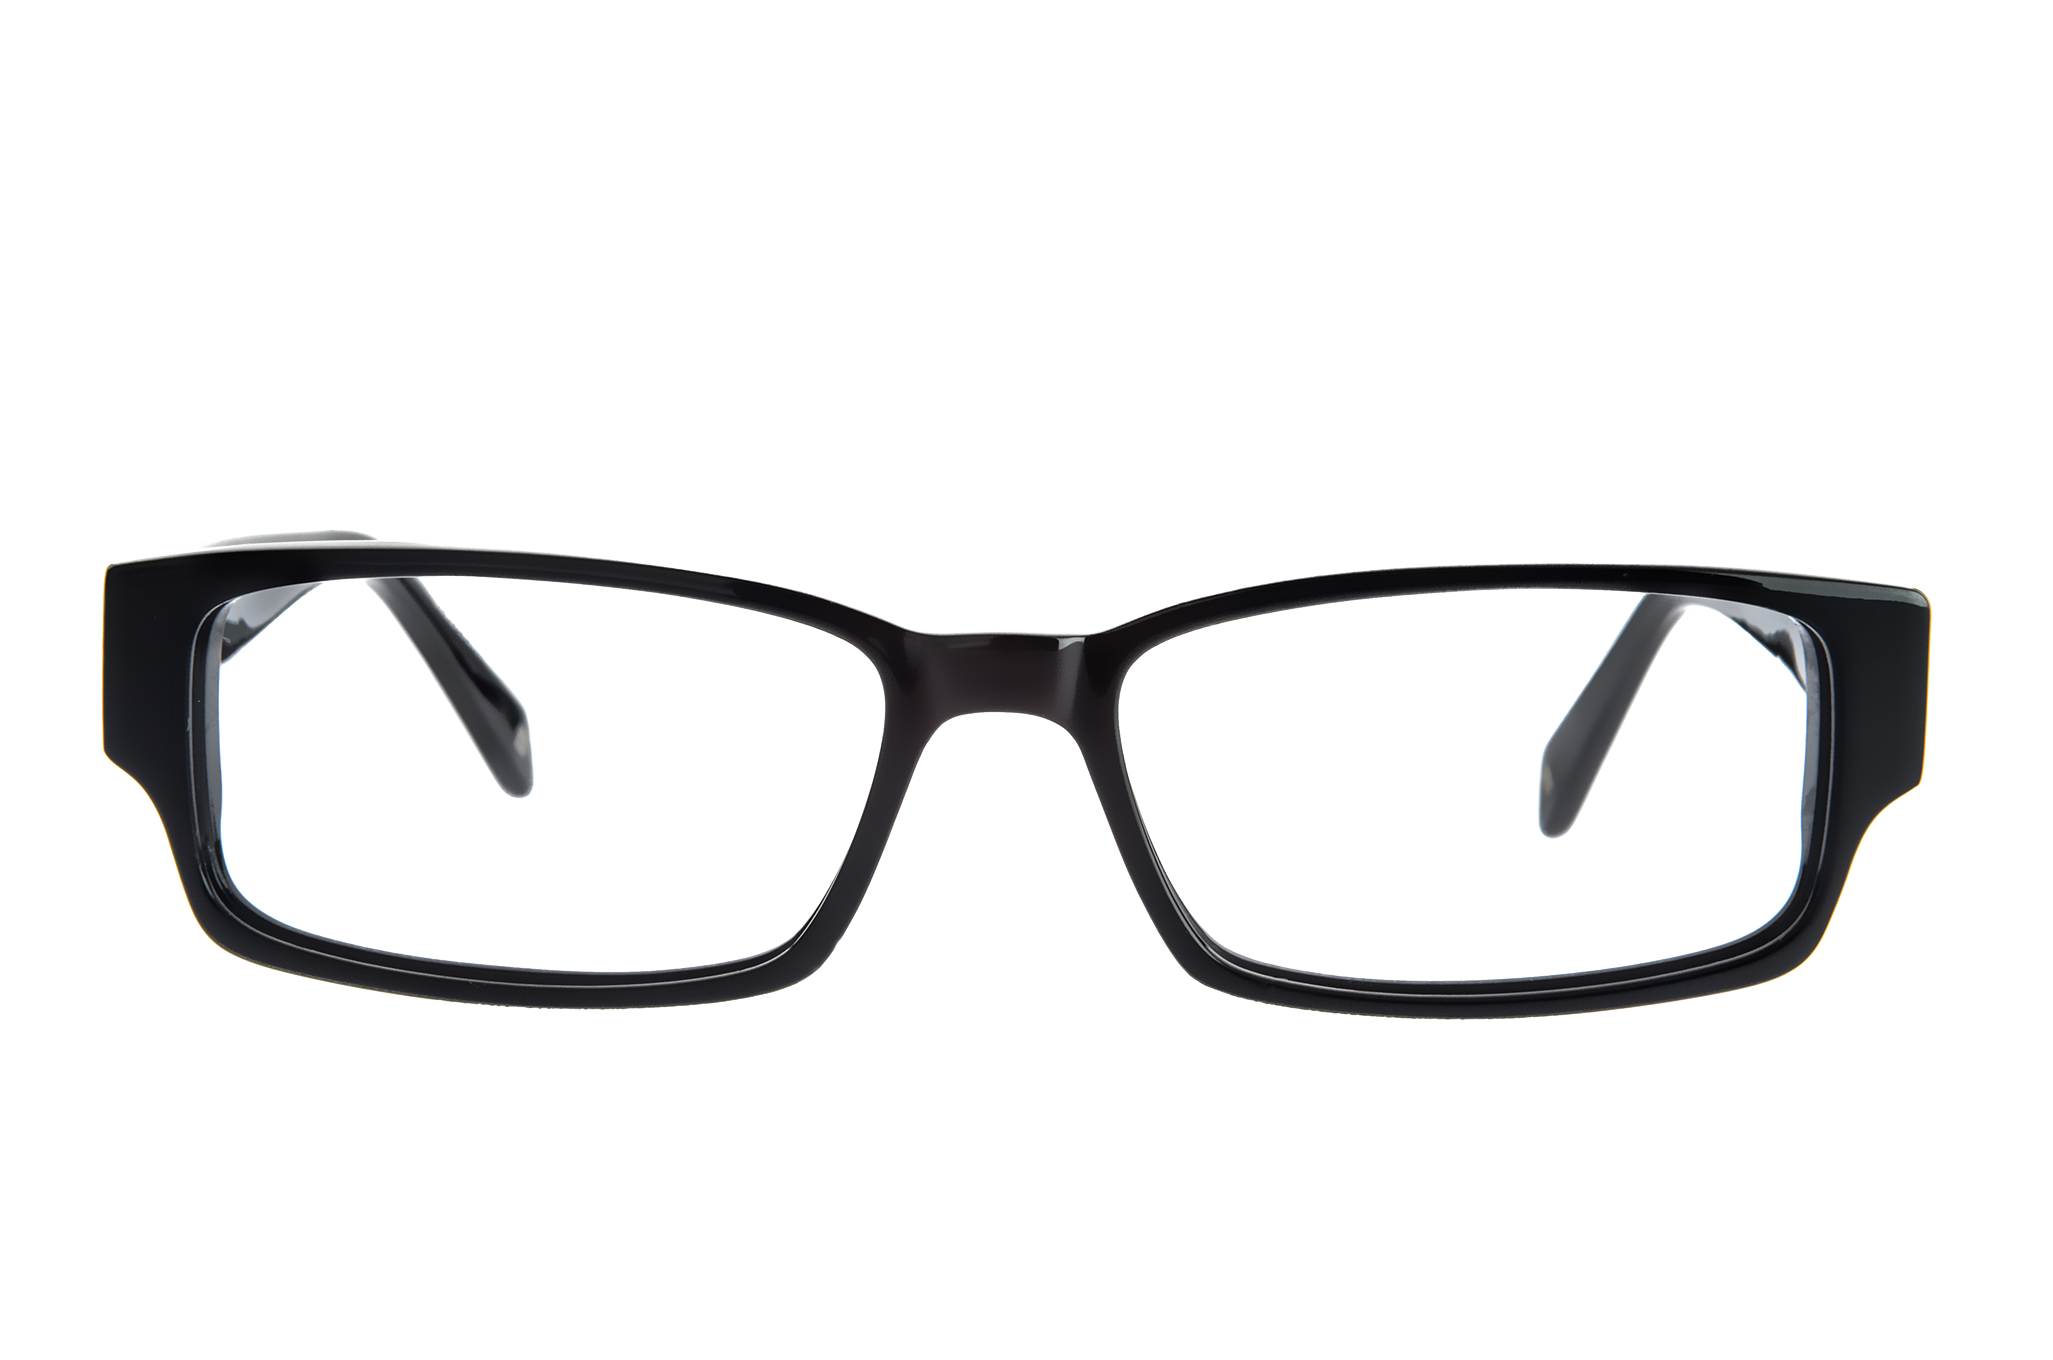 Glasses png. Прозрачные очки для фотошопа. Очки для фотошопа. Очки для зрения для фотошопа. Квадратные очки для фотошопа.